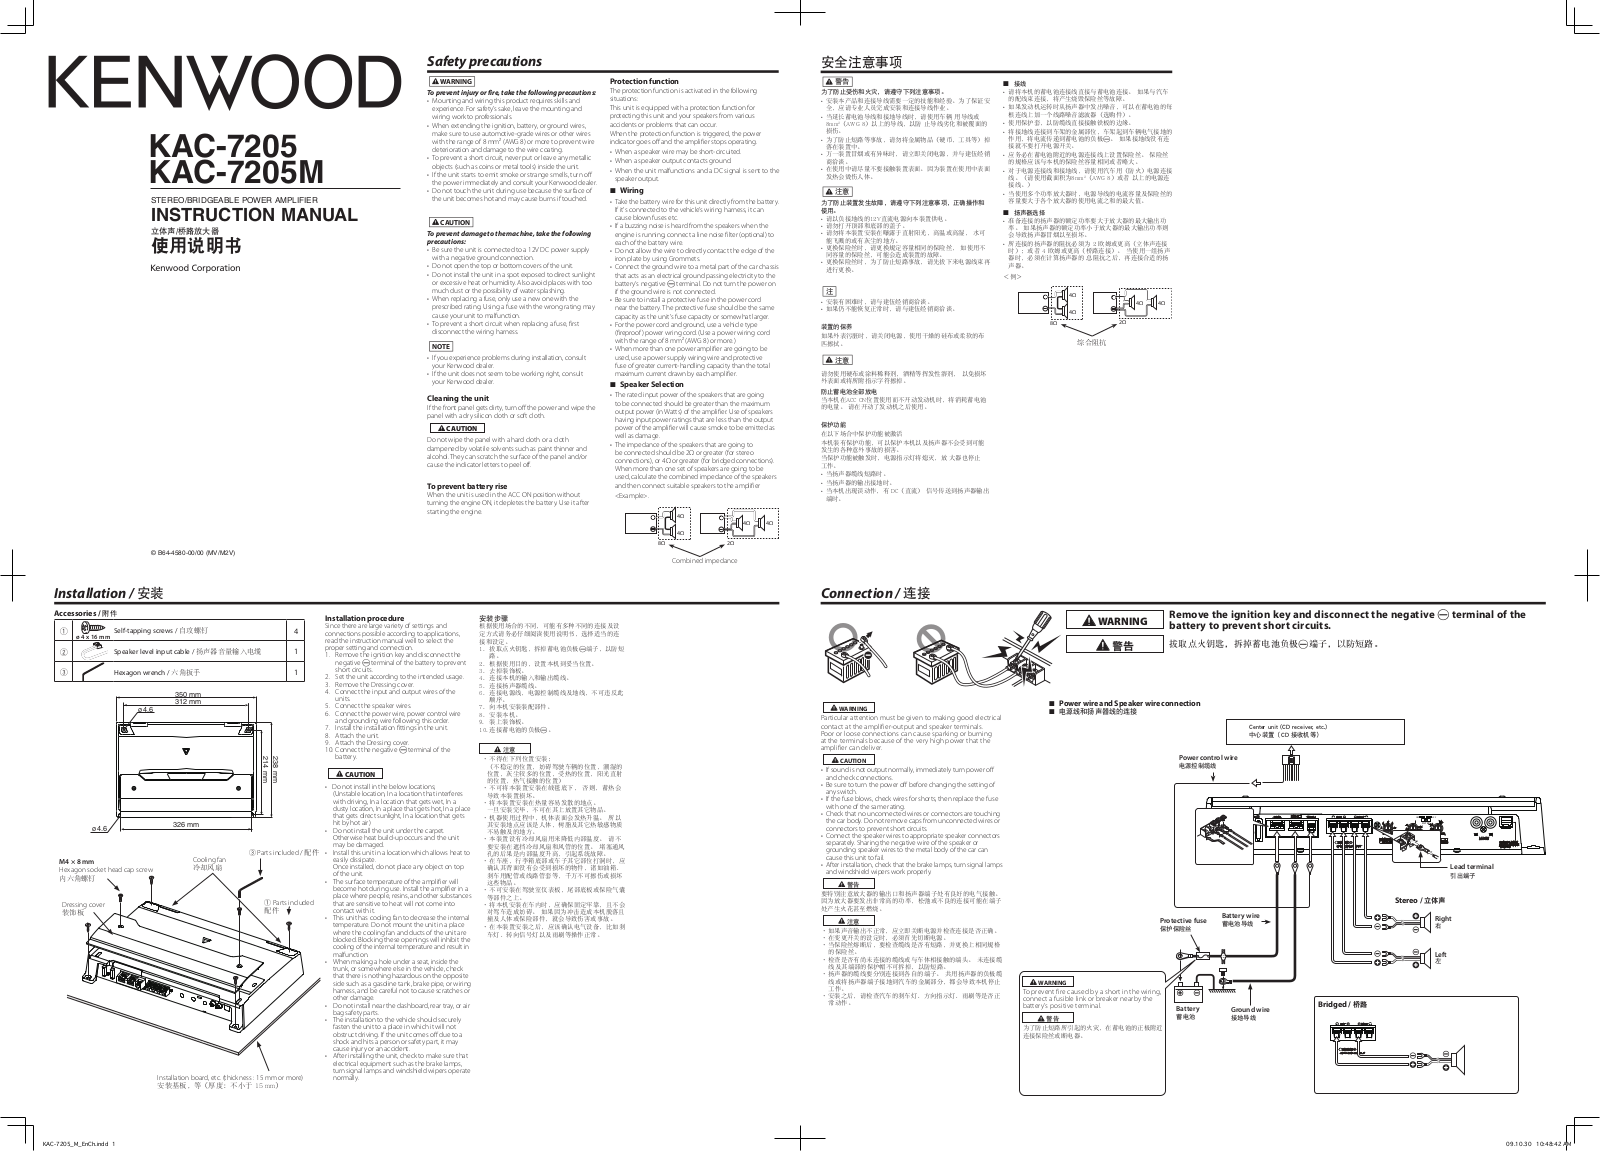 Kenwood KAC-7205M Instruction Manual